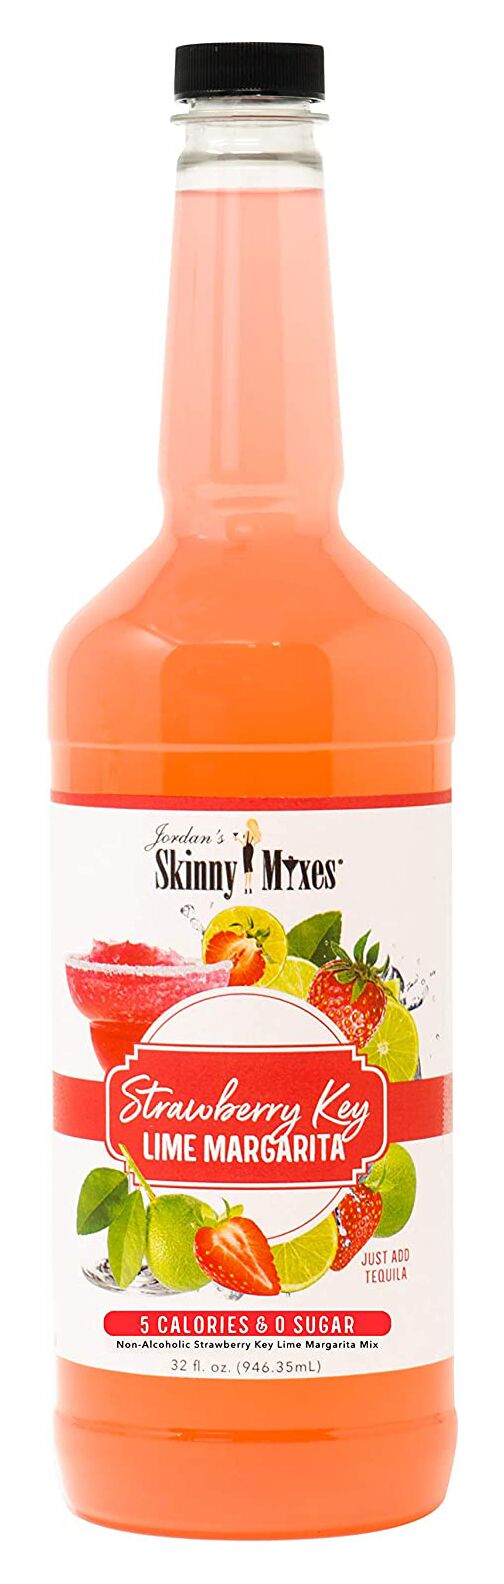 #Flavor_Strawberry Key Lime Margarita #Size_32 fl oz